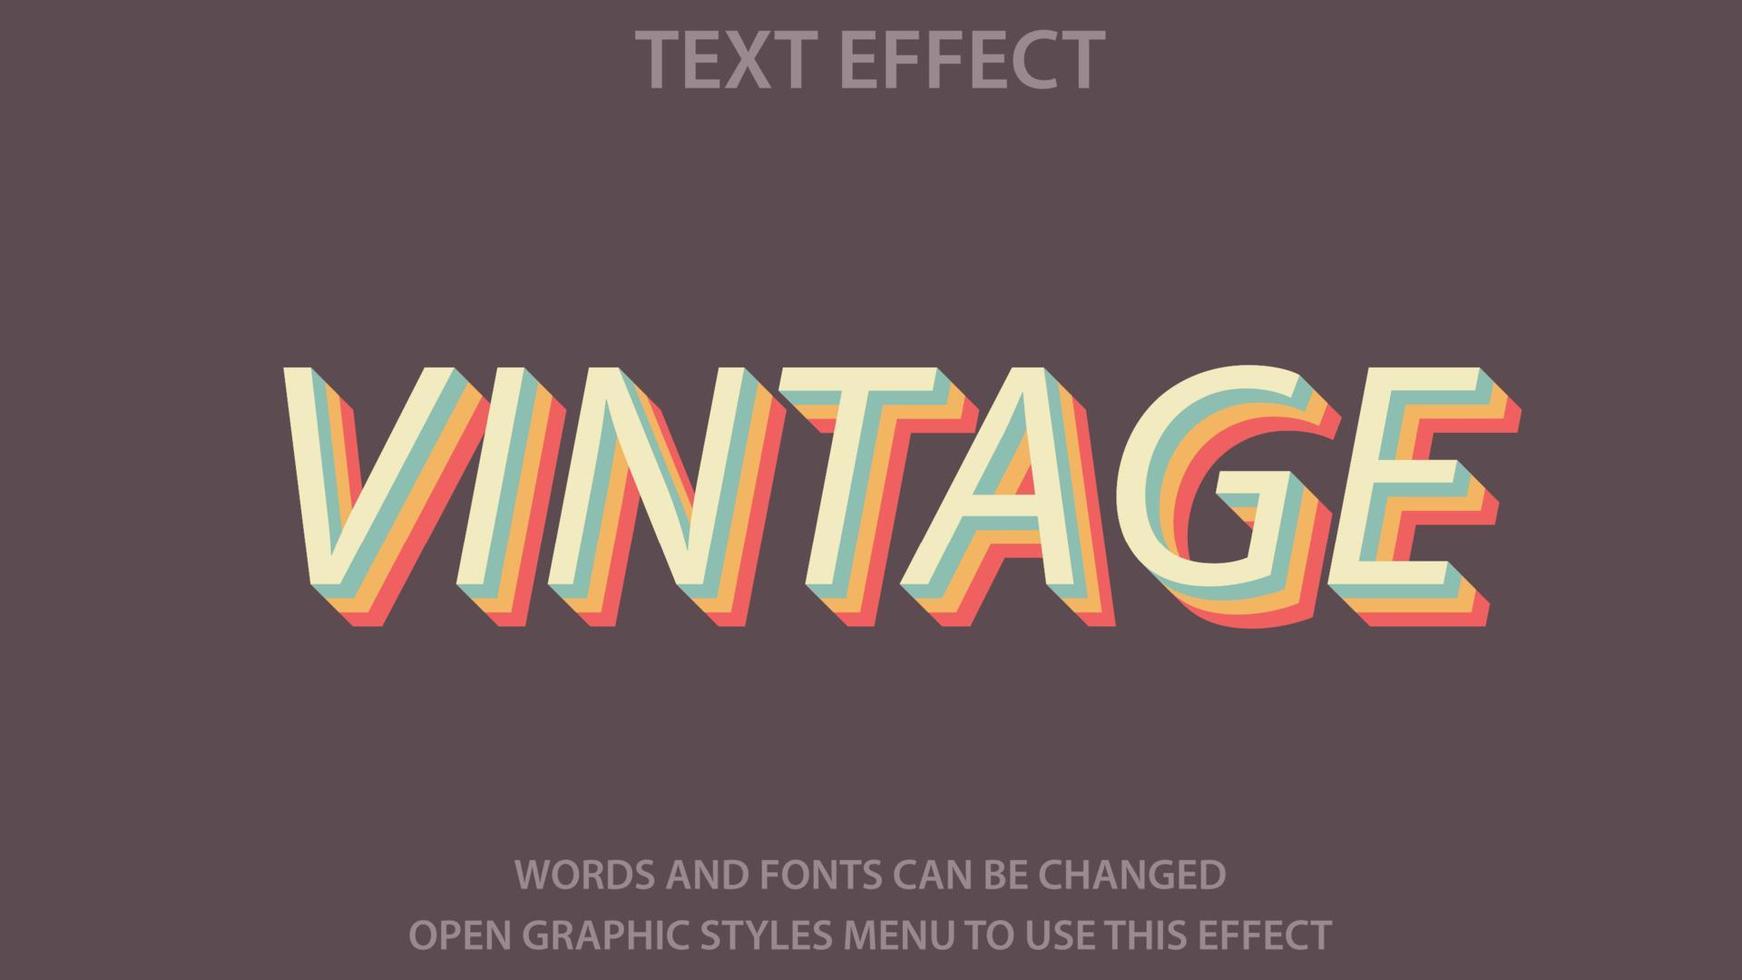 vintage text effect. Vector illustration. Editable